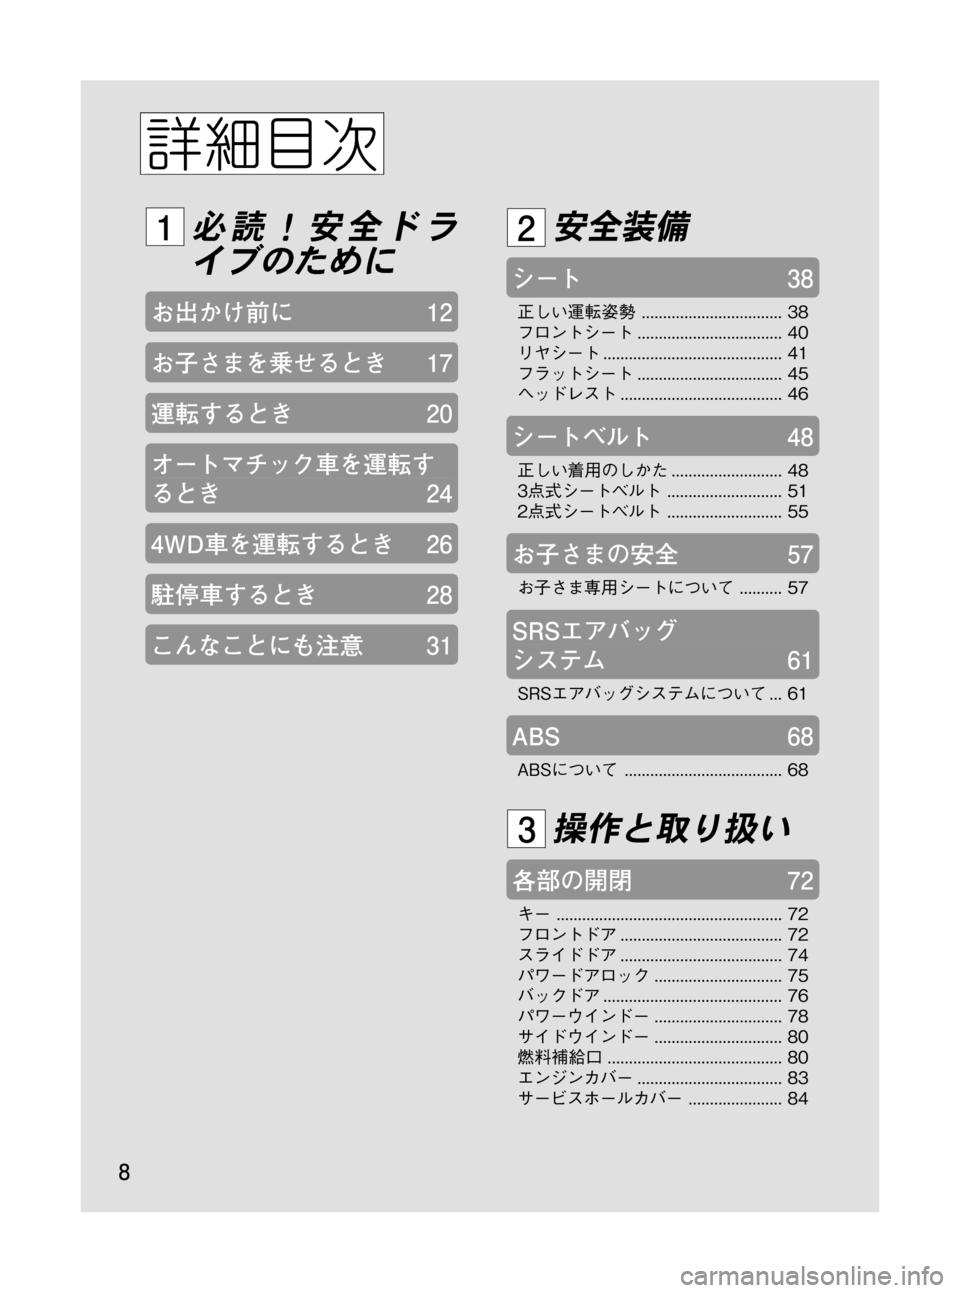 MAZDA MODEL BONGO VAN 2012  取扱説明書 (in Japanese) Black plate (8,1)
必読！安全ドラ
イブのために
お出かけ前に12
お子さまを乗せるとき17
運転するとき20
オートマチック車を運転す
るとき24
4WD車を運転�